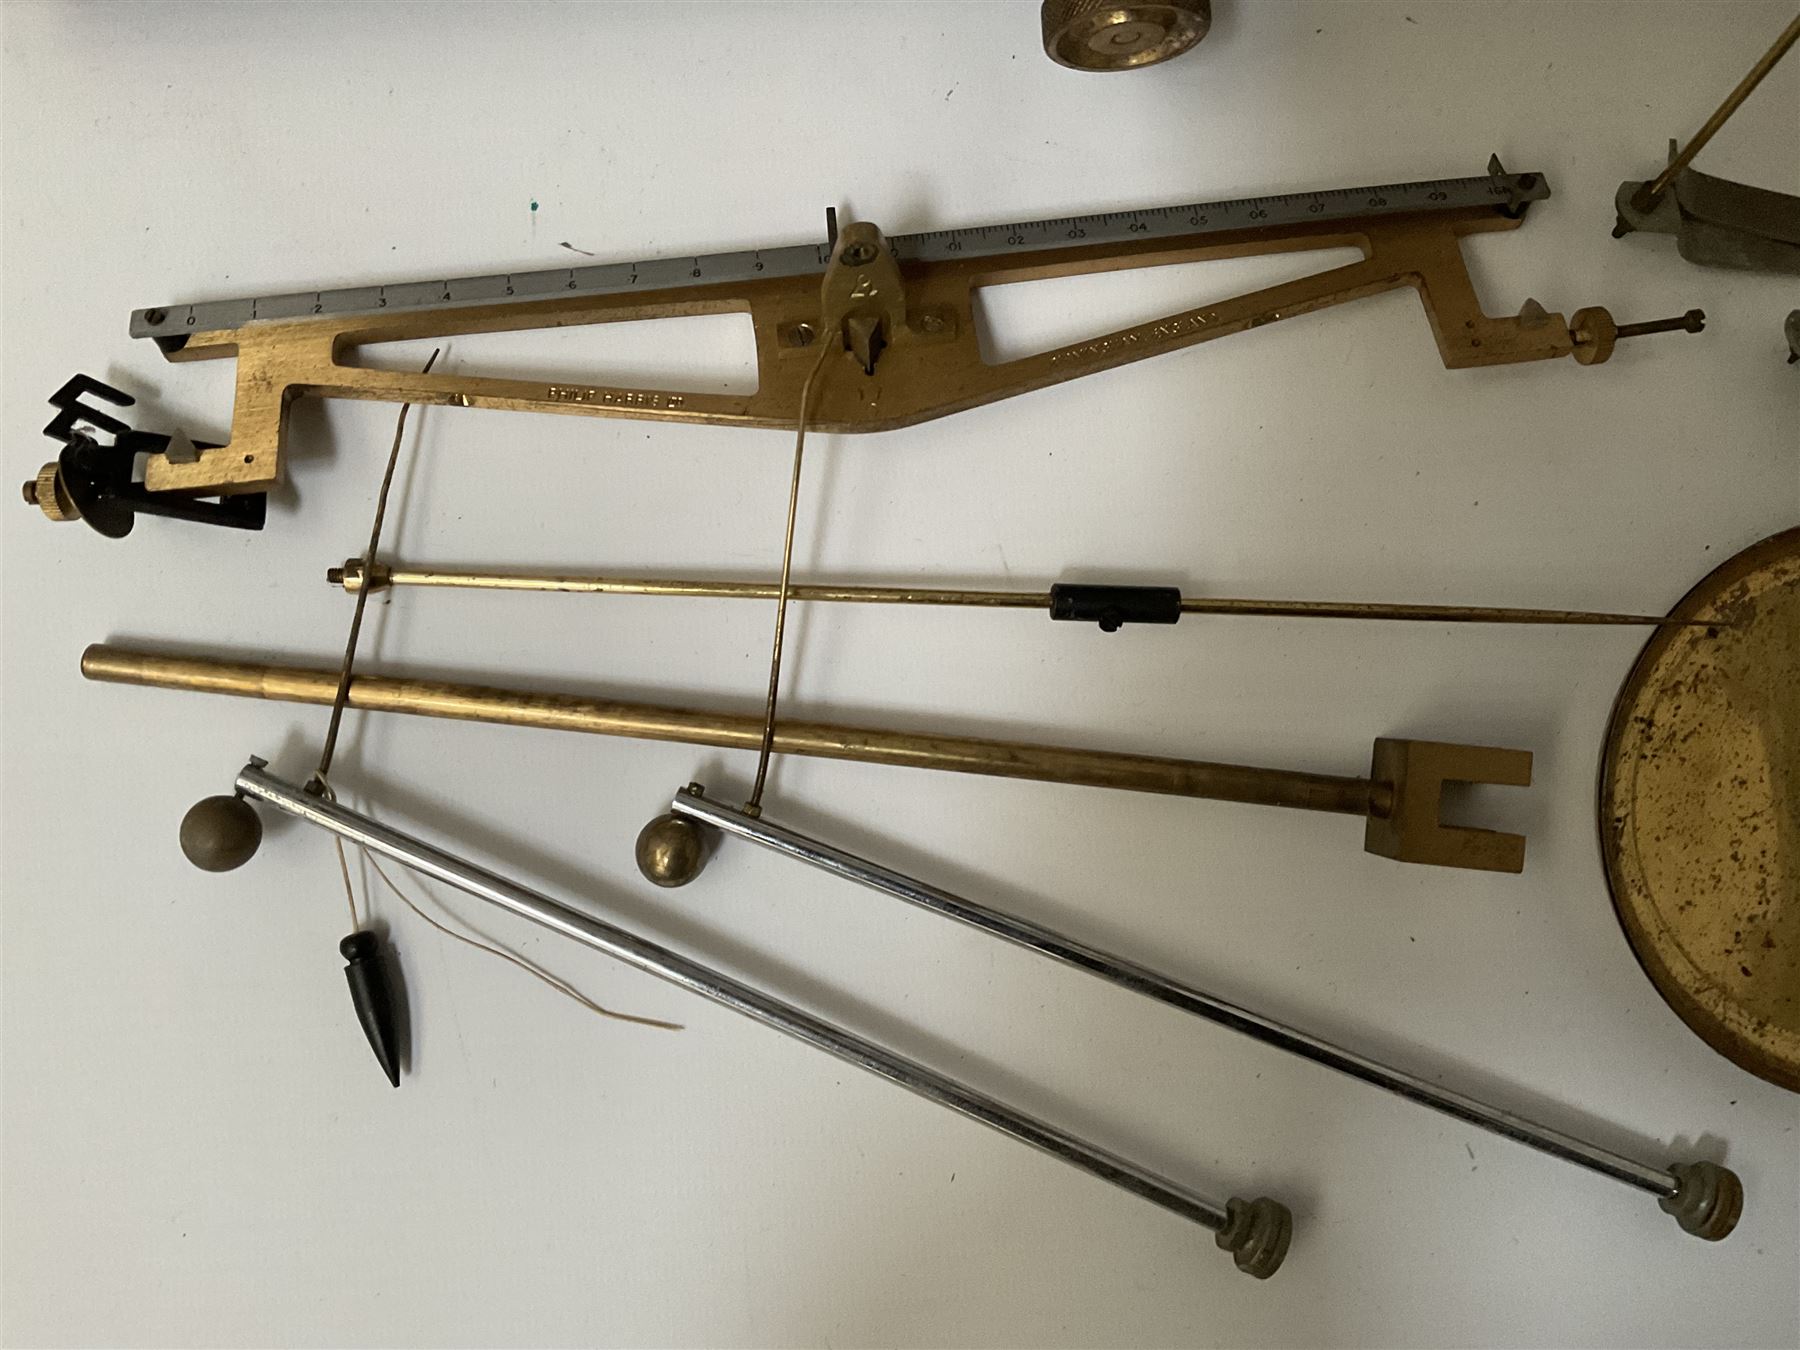 Cased set of Philip Harris of Birmingham laboratory scales - Image 2 of 3